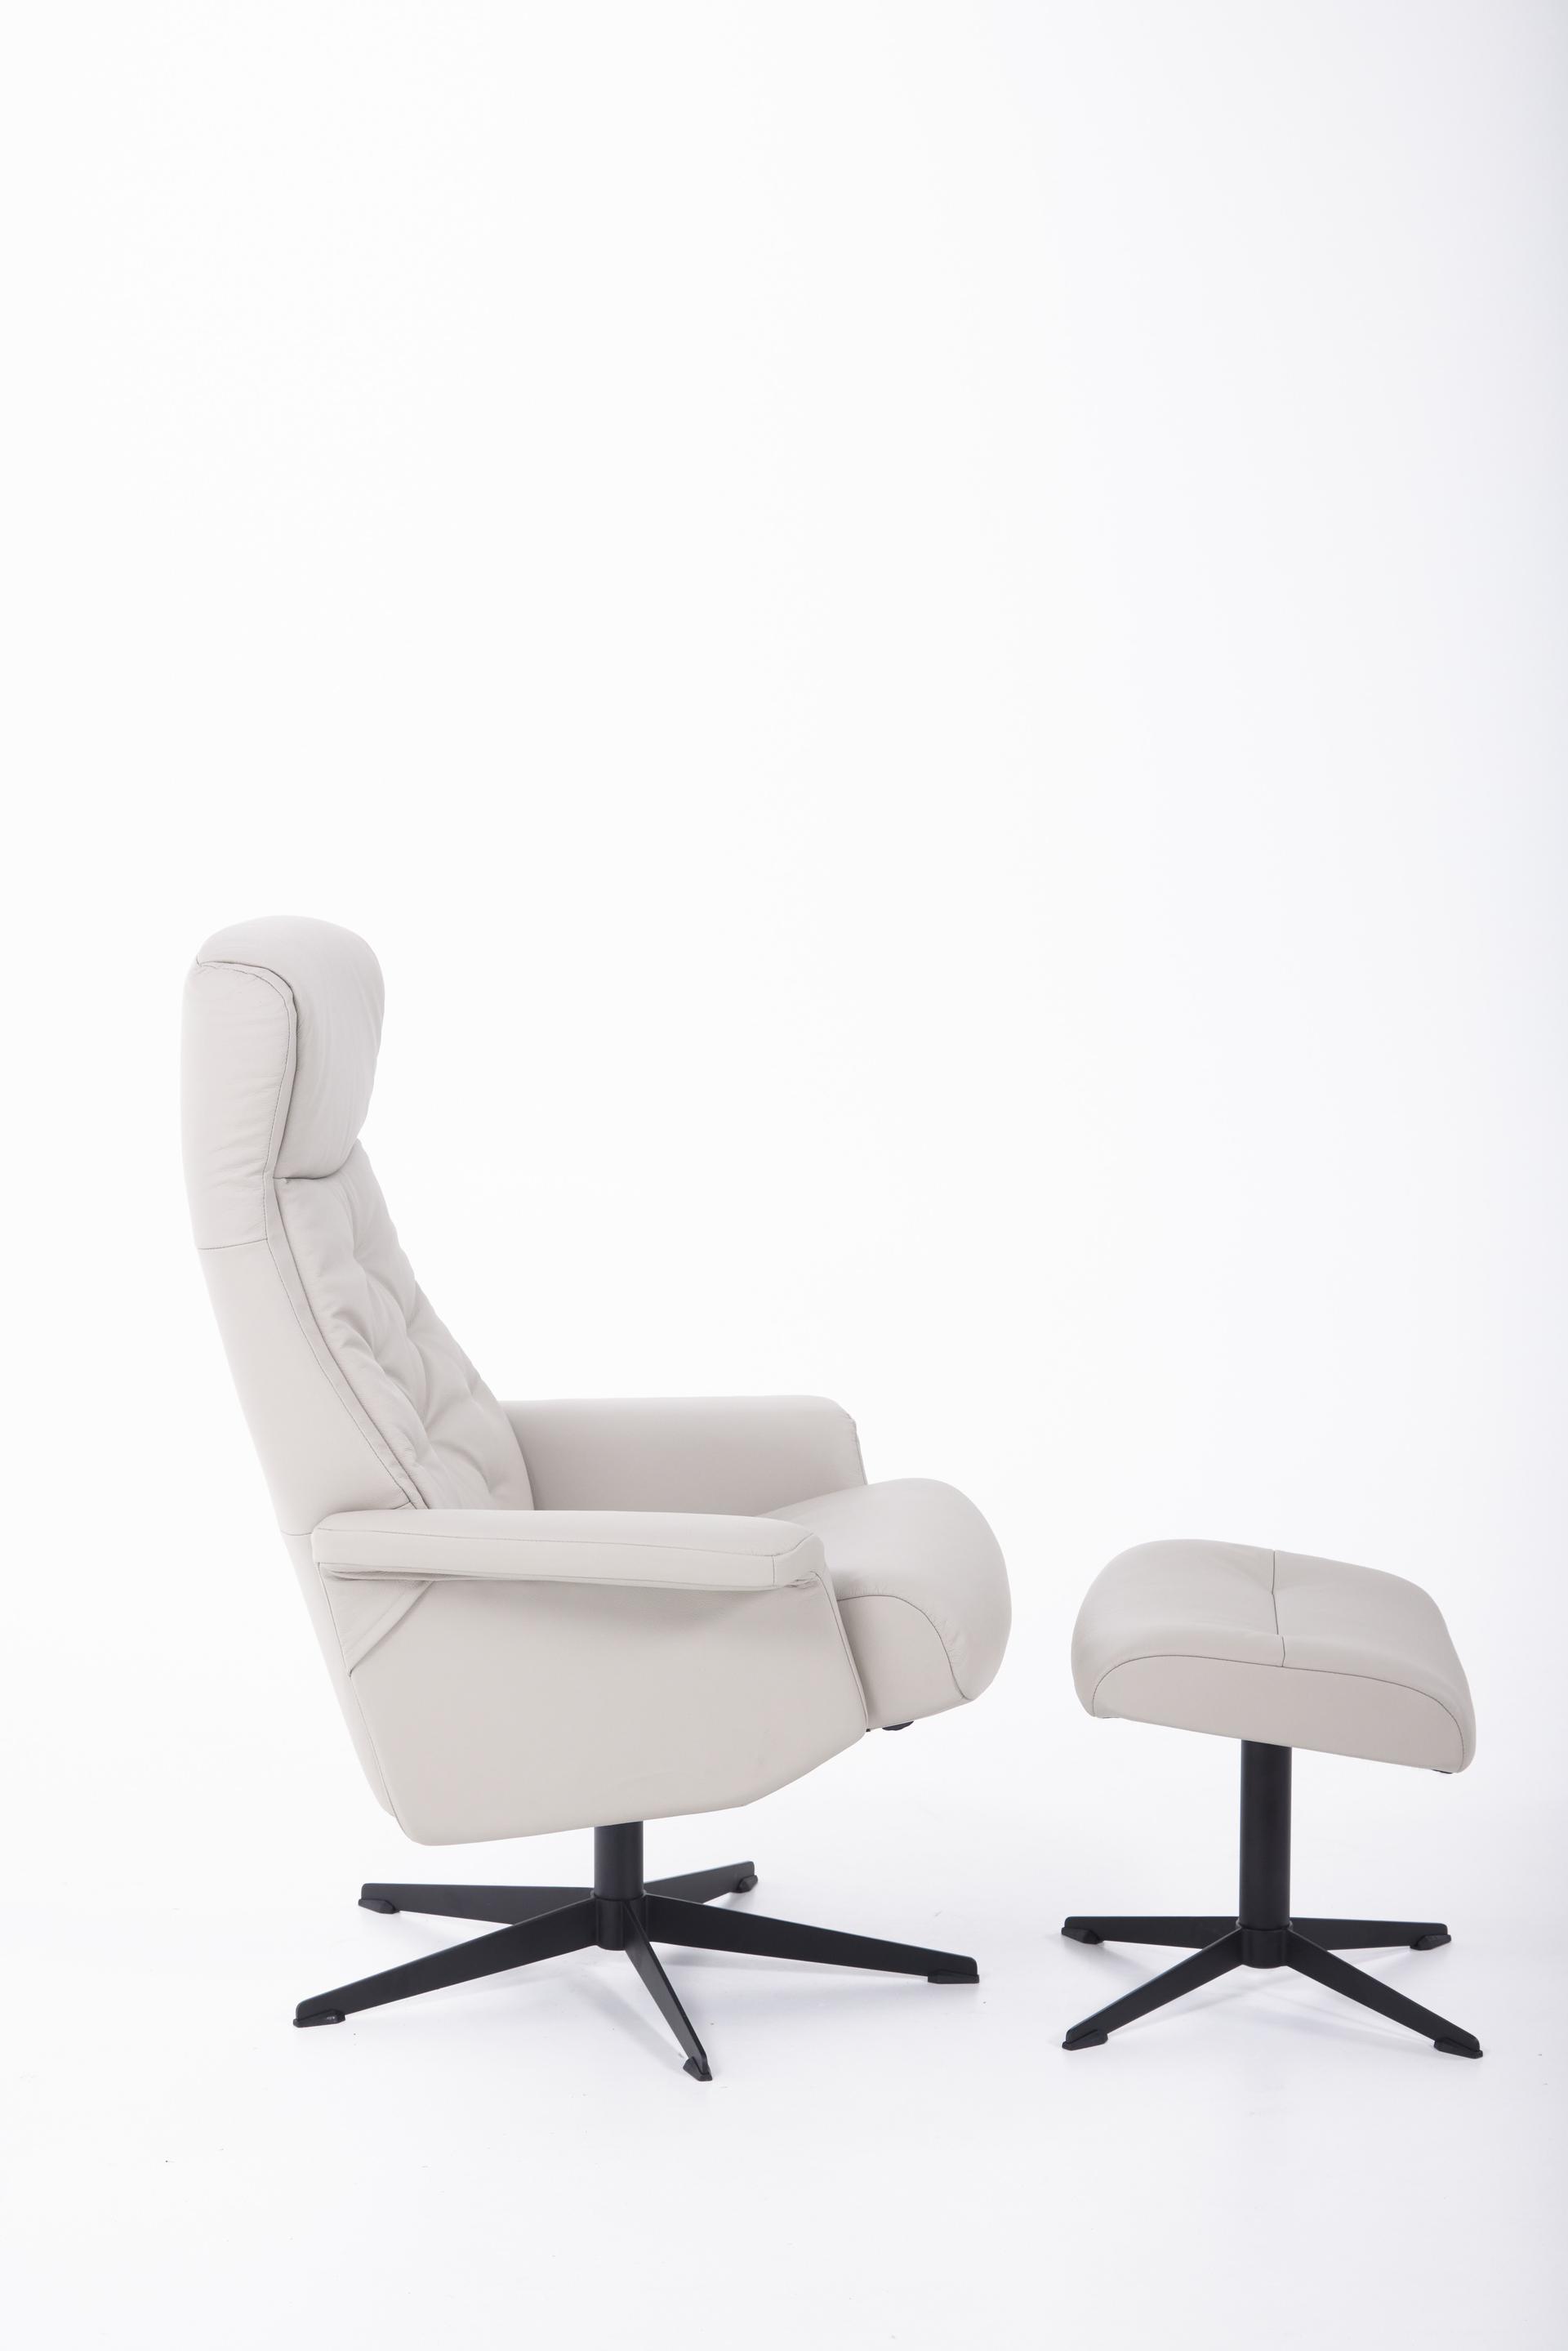 Ekornes Scandi 1120 Chair Prime Cloud